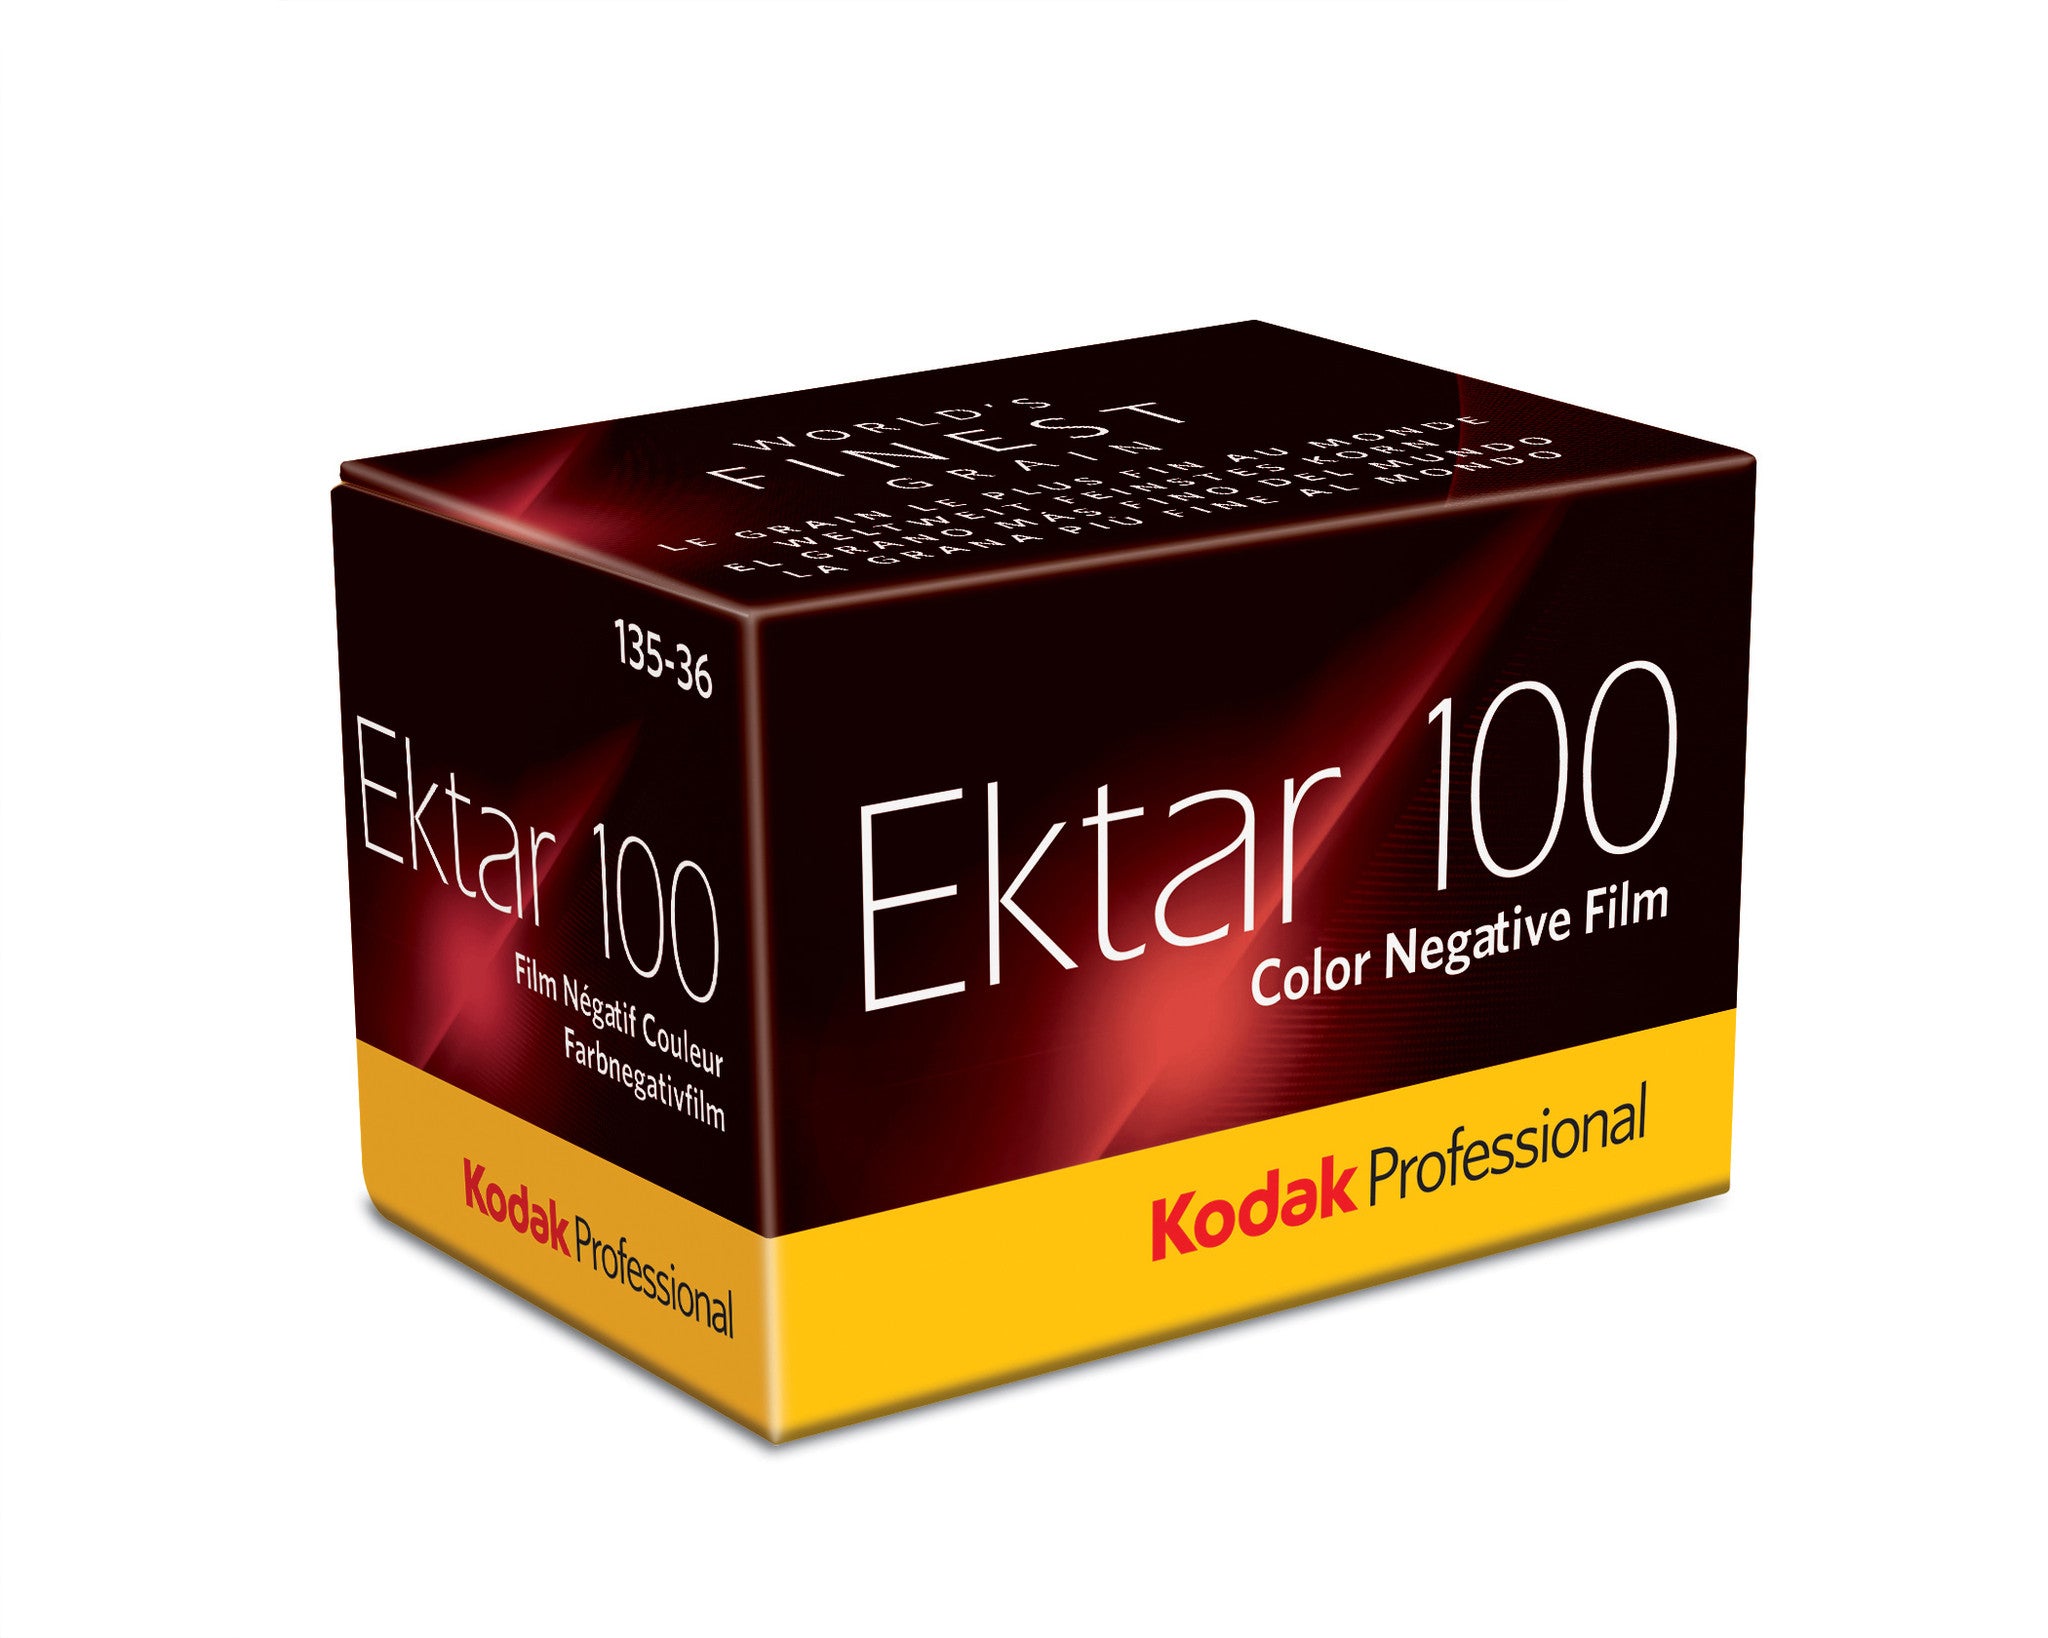 Kodak Ektar 100 135-36 Color Neg. Film (One Roll), camera film, Kodak - Pictureline 